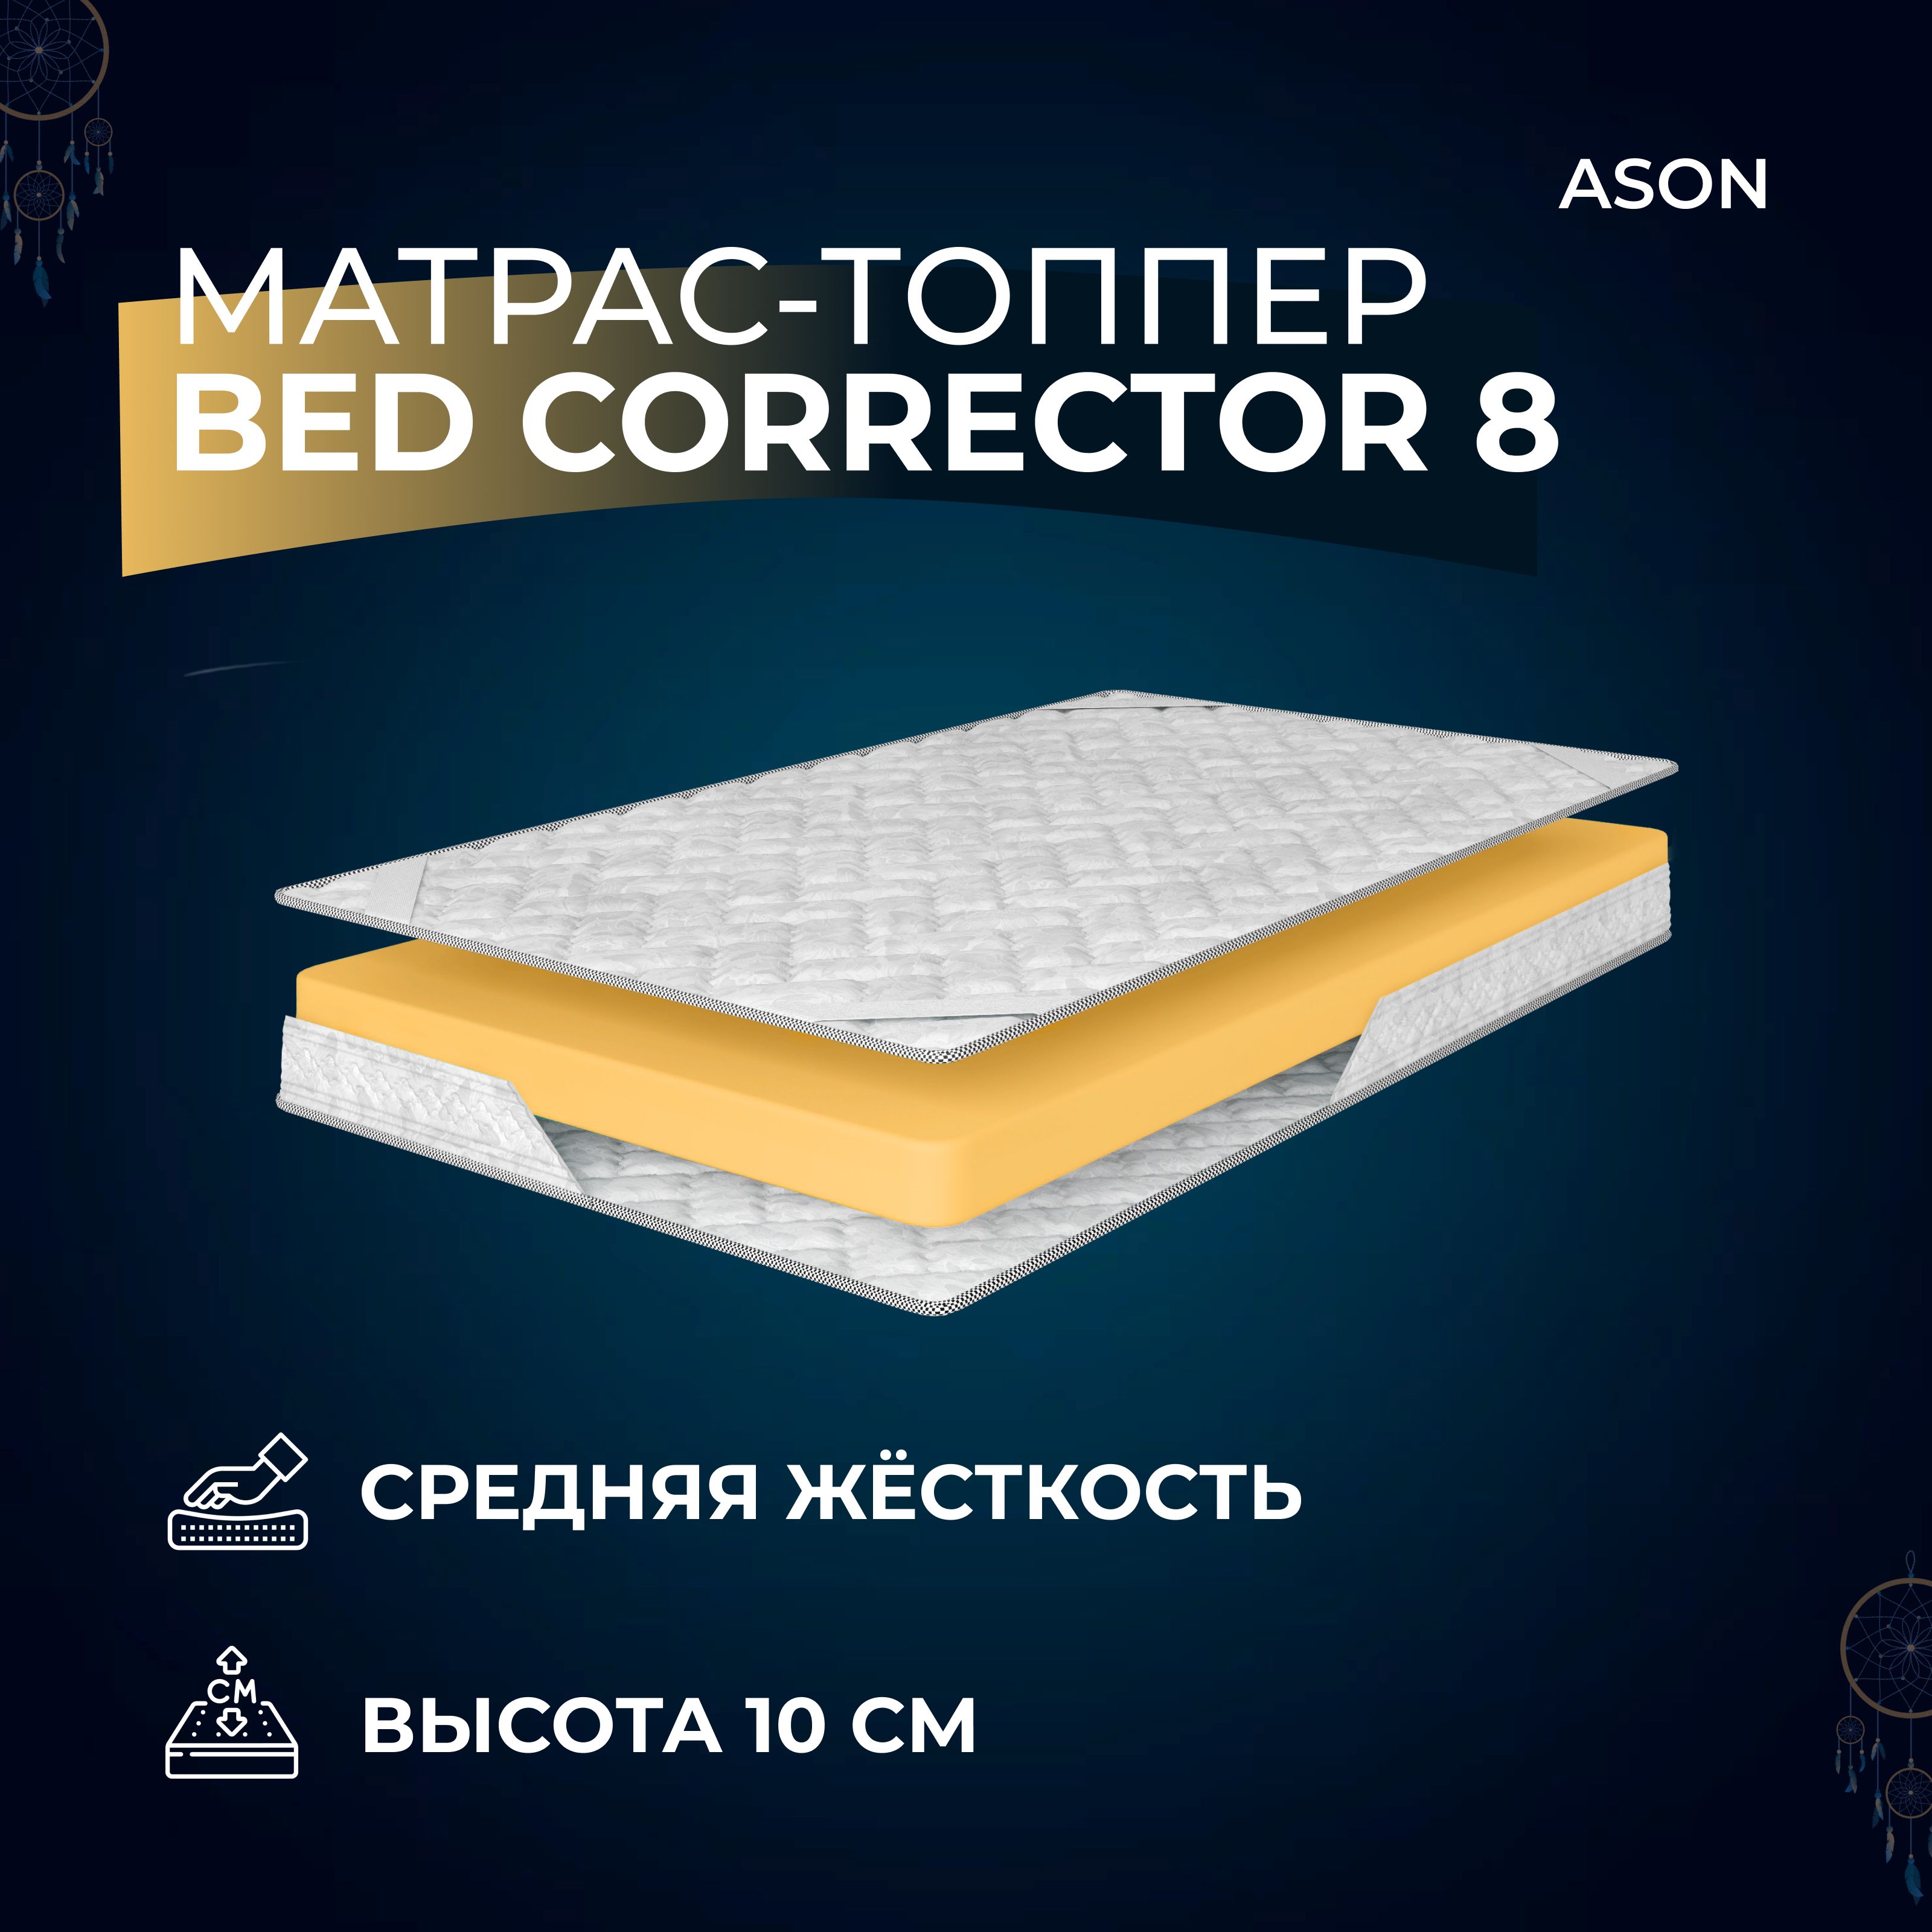 Матрас-топпер 180х190 Ason, Bed corrector 8